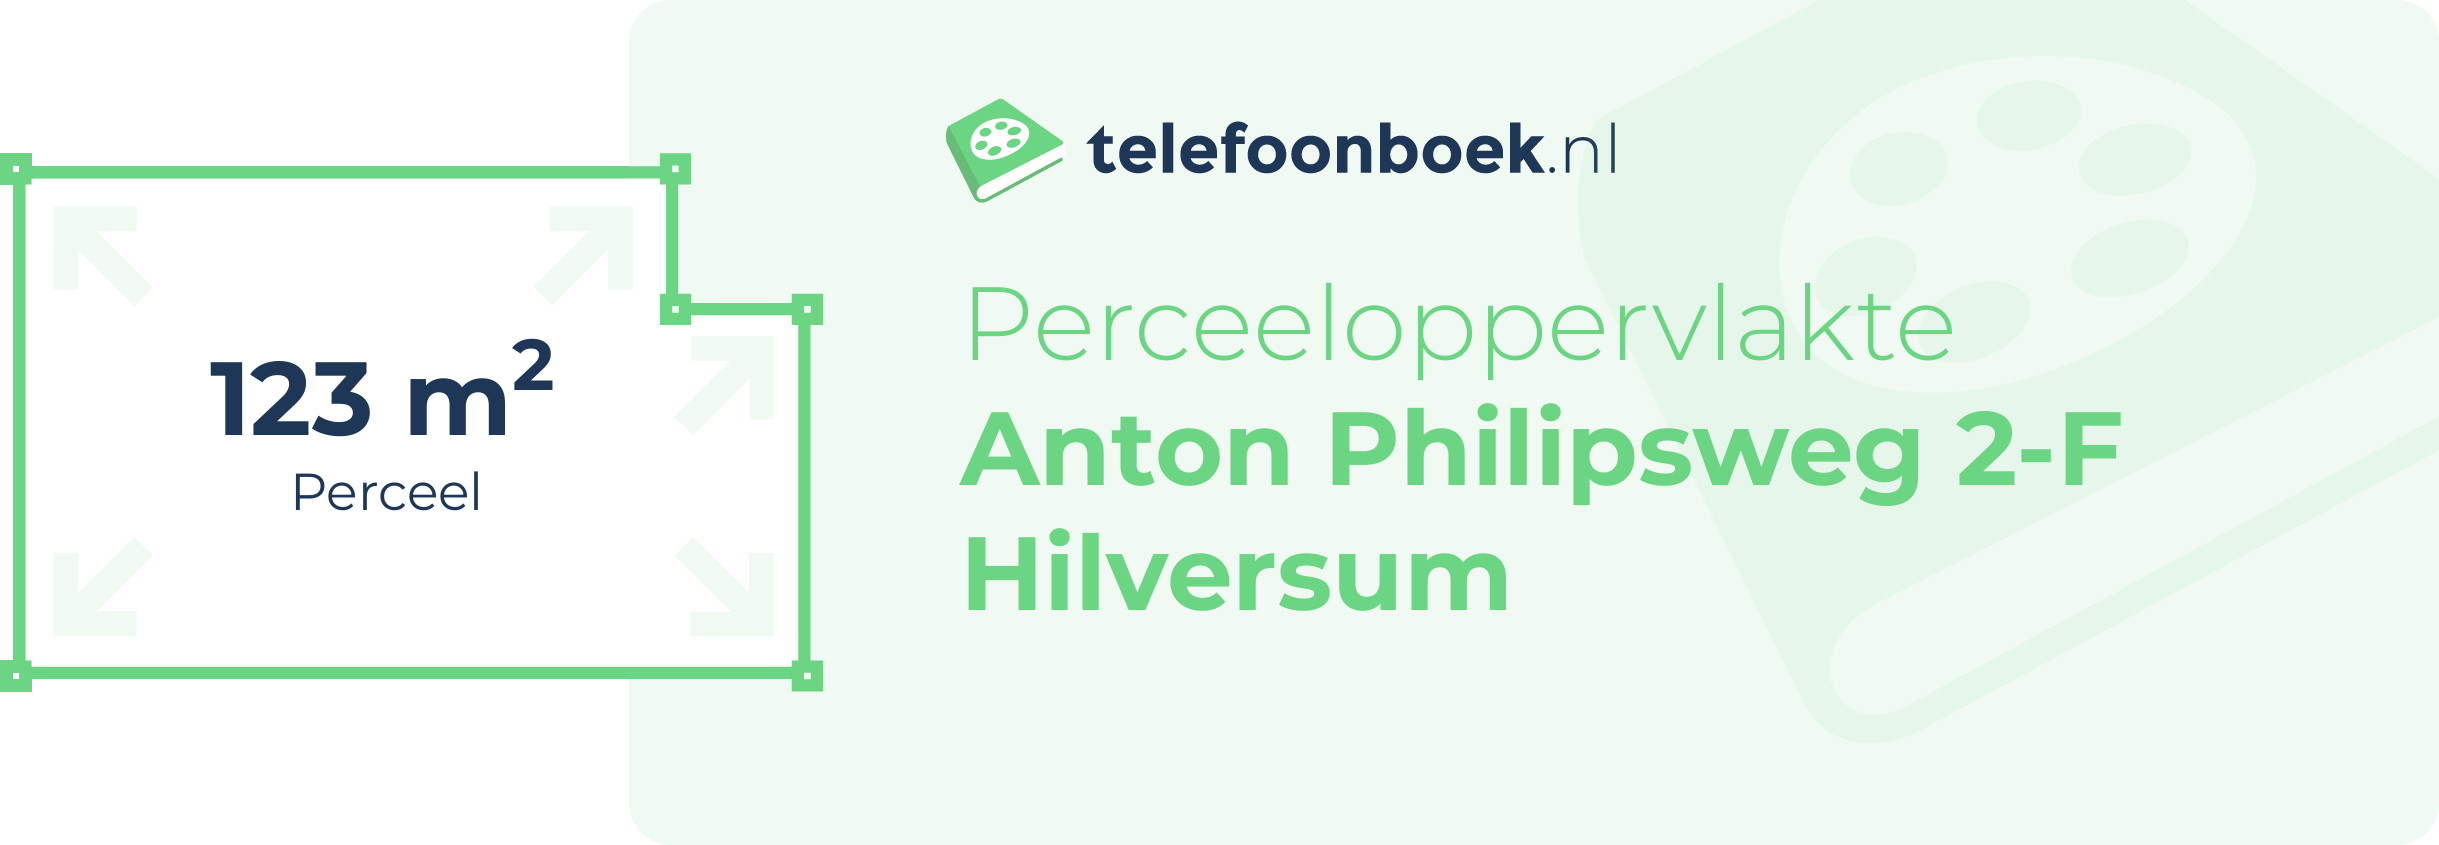 Perceeloppervlakte Anton Philipsweg 2-F Hilversum